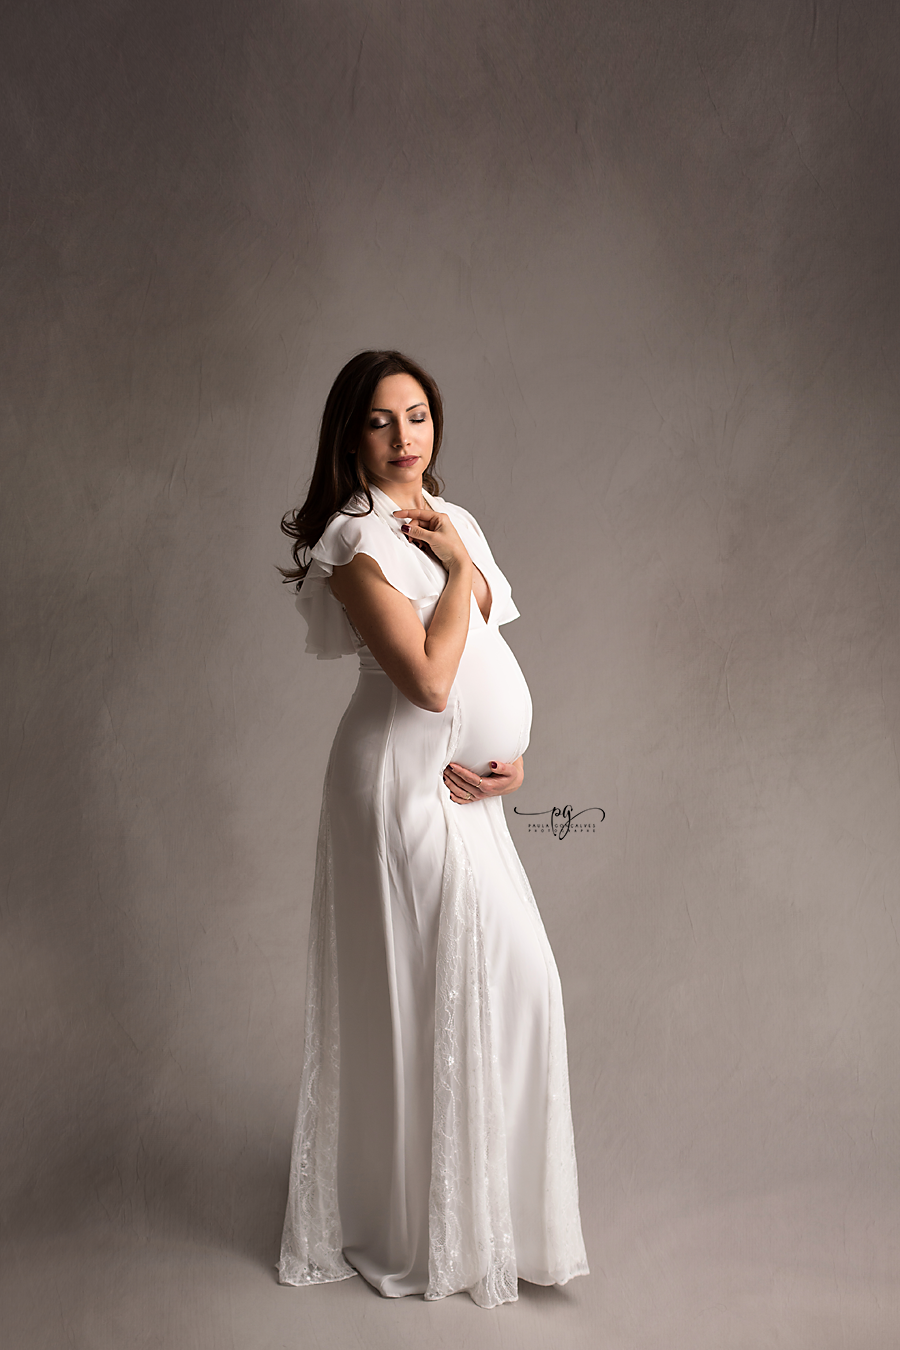 photographe-moselle-grossesse-femme-enceinte-amandine